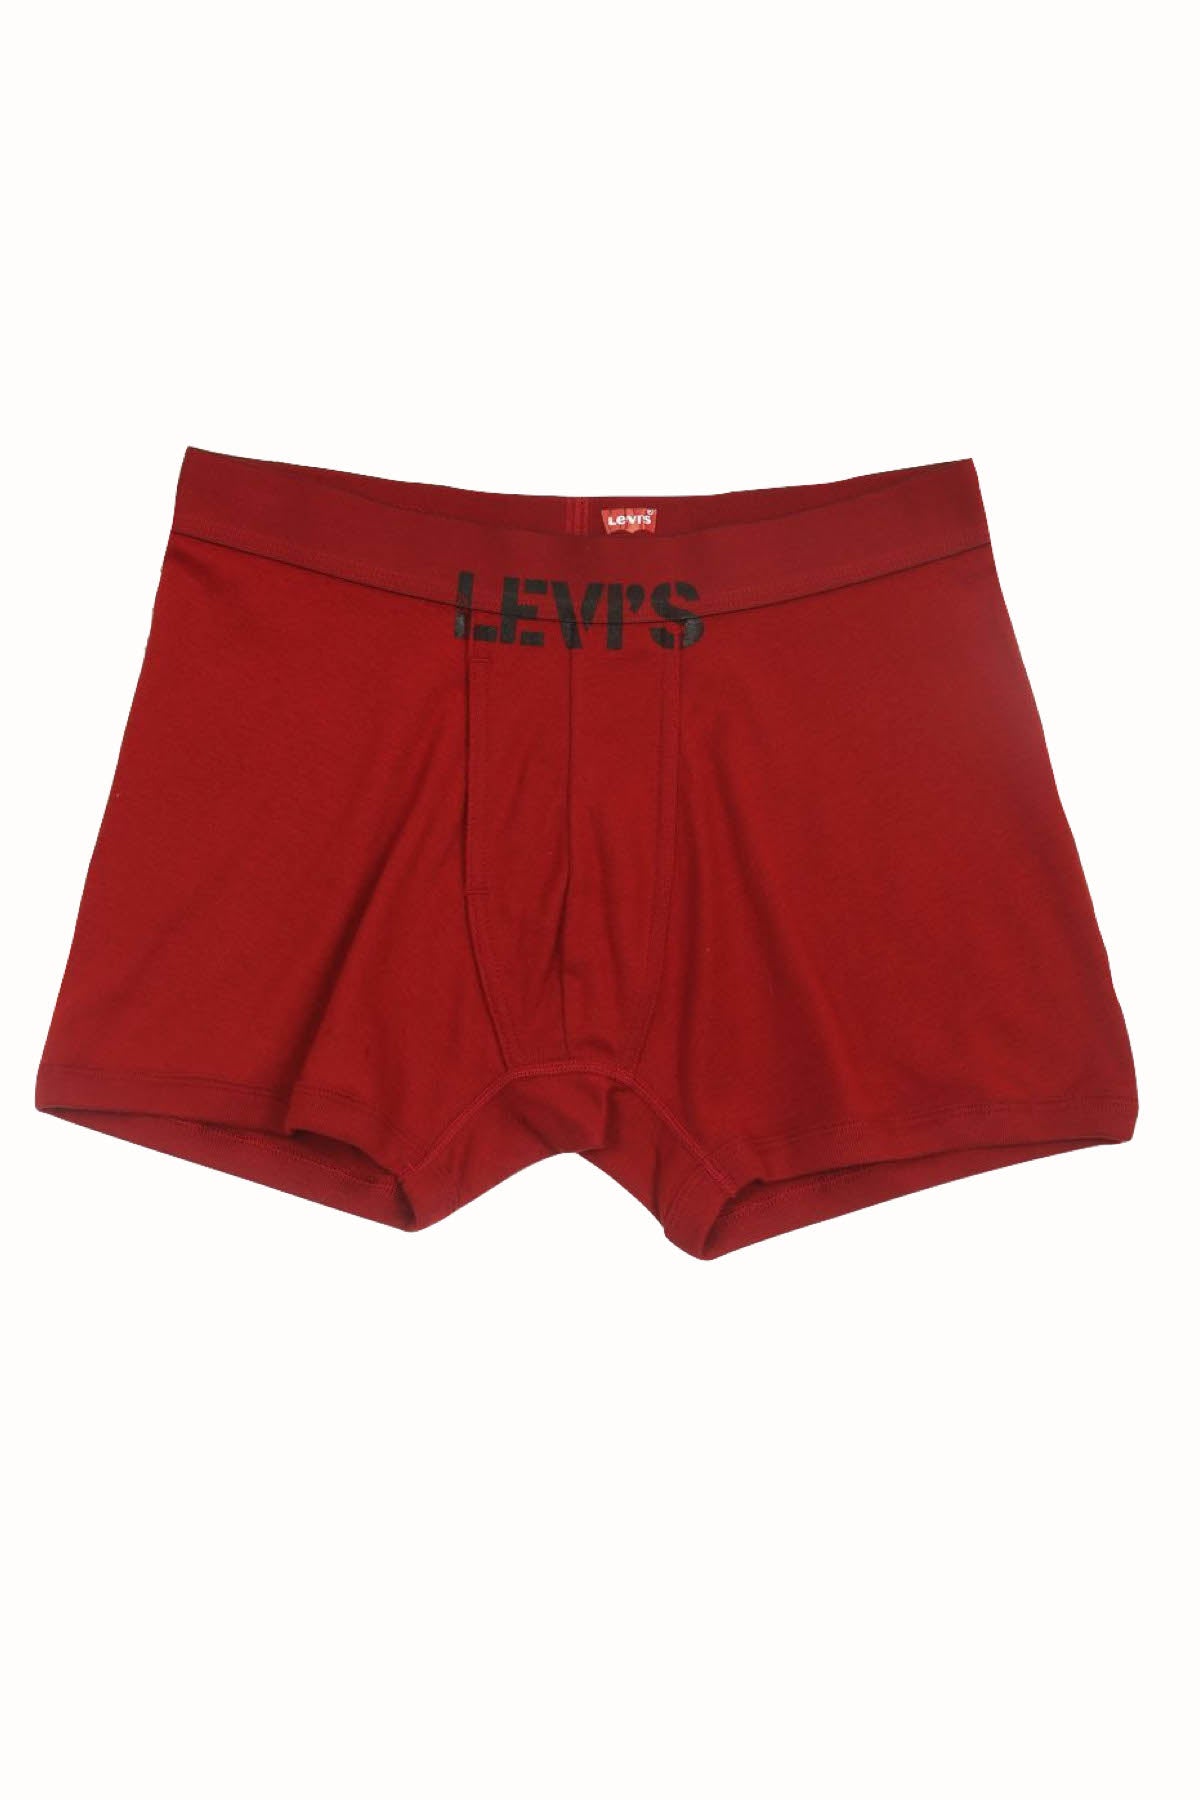 Levi's Red 100 Series Cotton-Stretch Boxer Brief